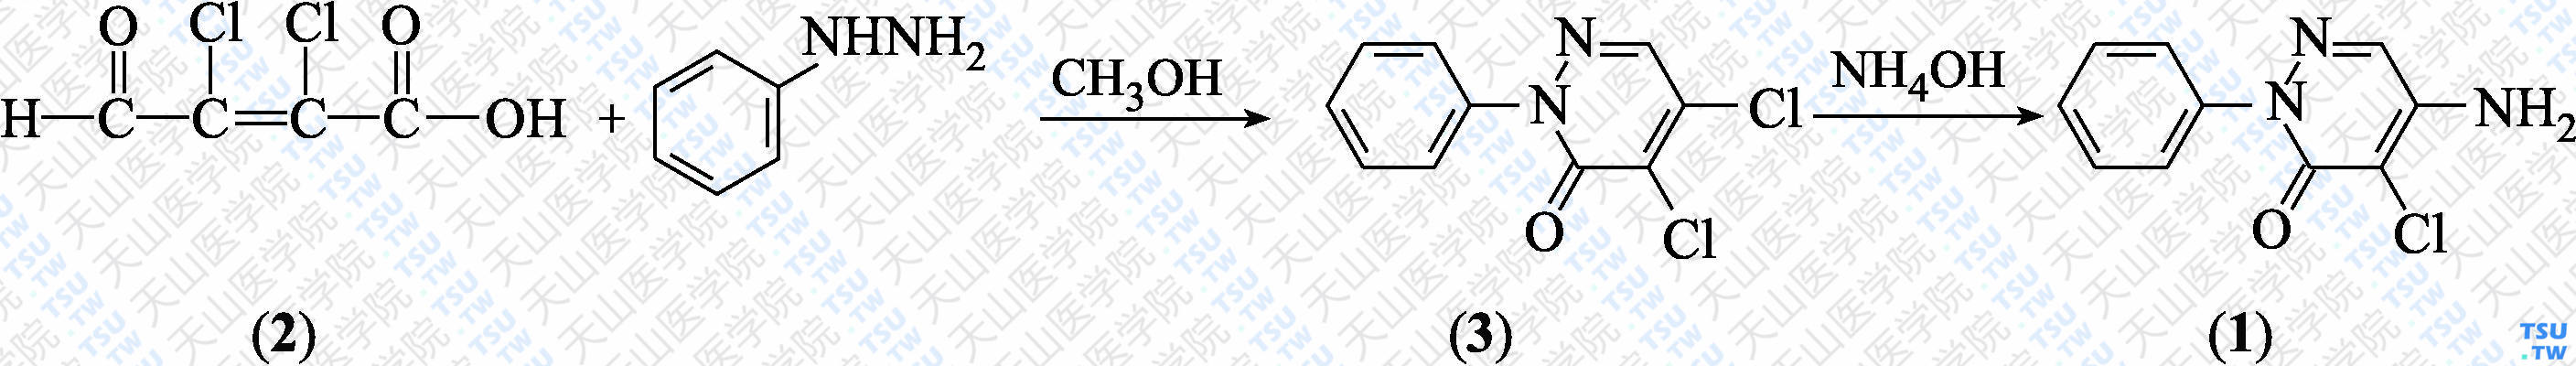 4-氨基-5-氯-2-苯基-3（2<i>H</i>）-哒嗪酮（分子式：C<sub>10</sub>H<sub>8</sub>ClN<sub>3</sub>O）的合成方法路线及其结构式